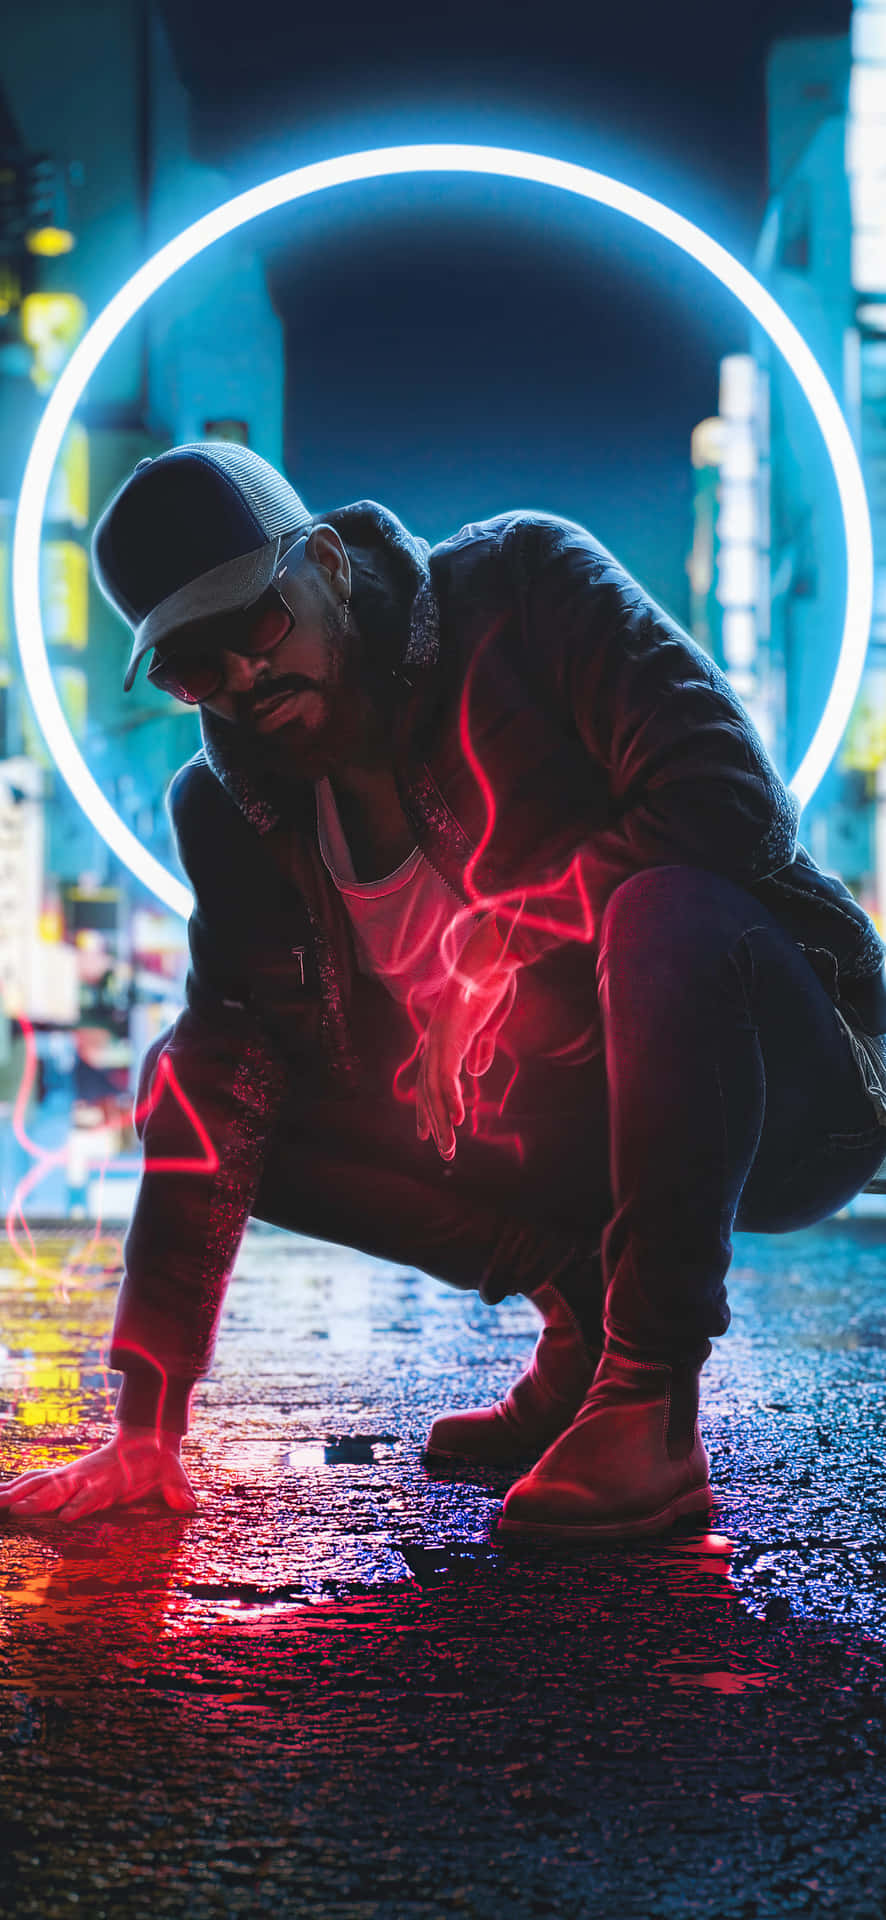 En mand knæler på gaden med et neon lys skilt i baggrunden. Wallpaper